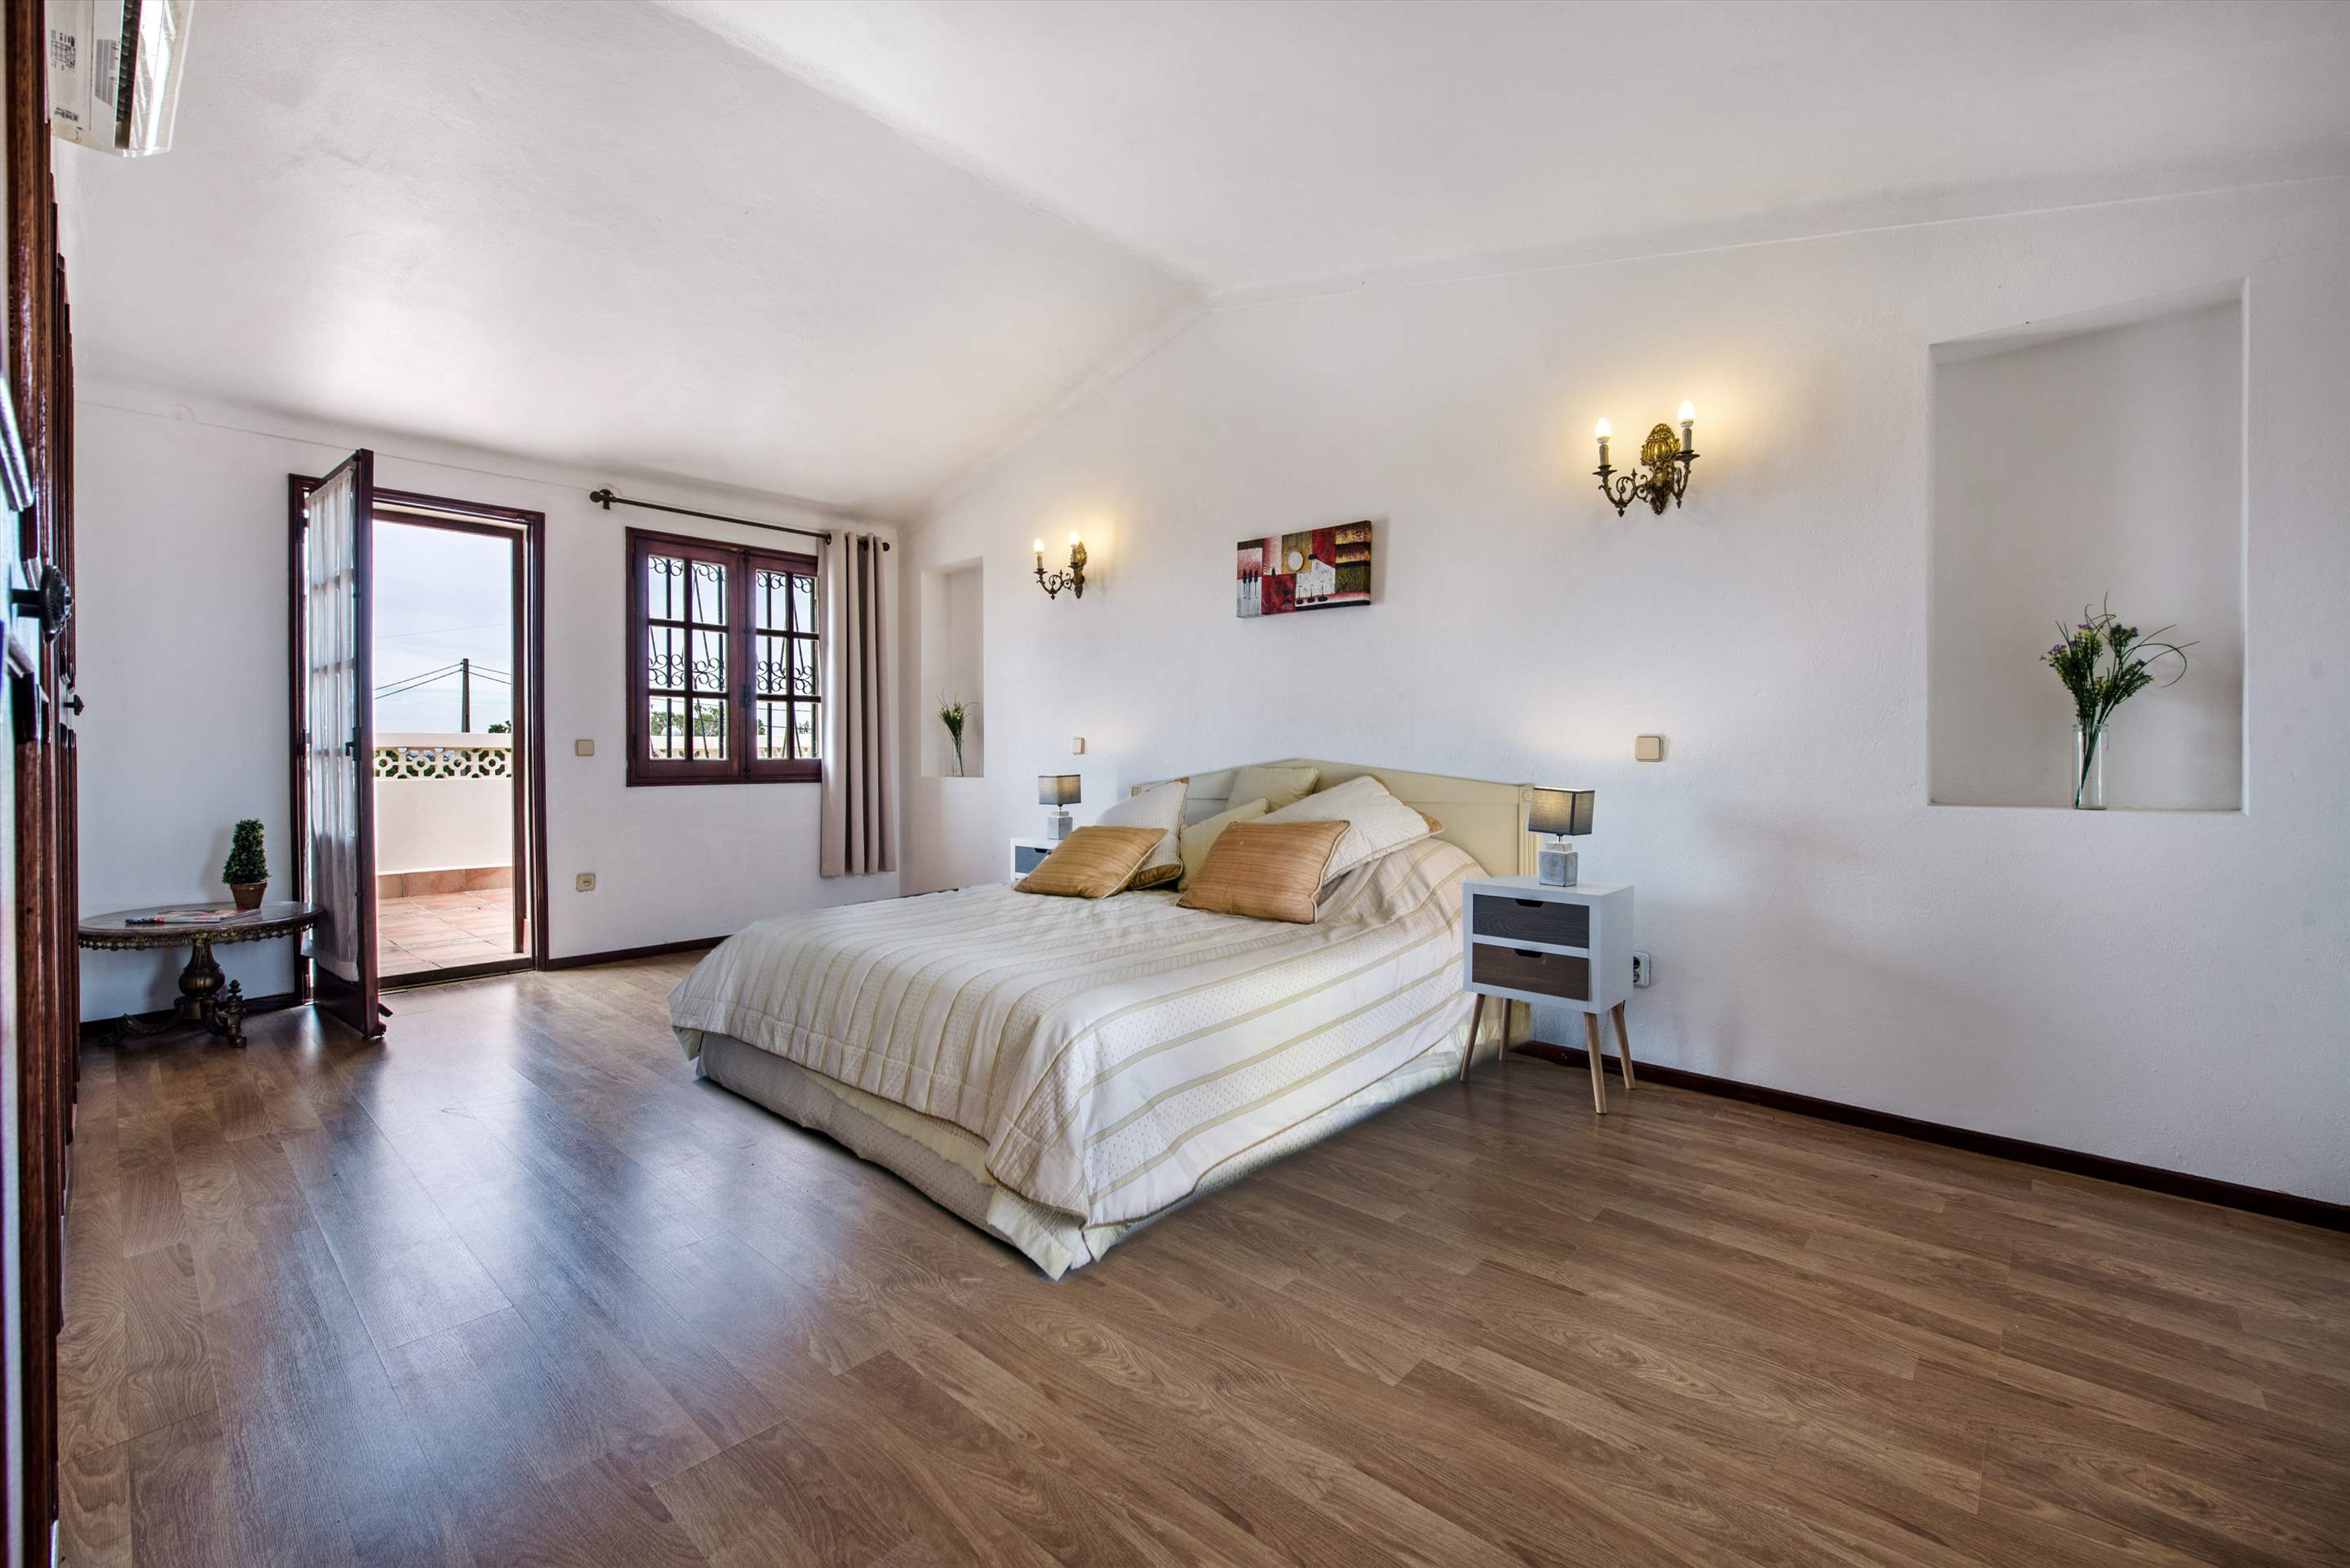 Casa Isabel, 3 bedroom villa in Gale, Vale da Parra and Guia, Algarve Photo #15